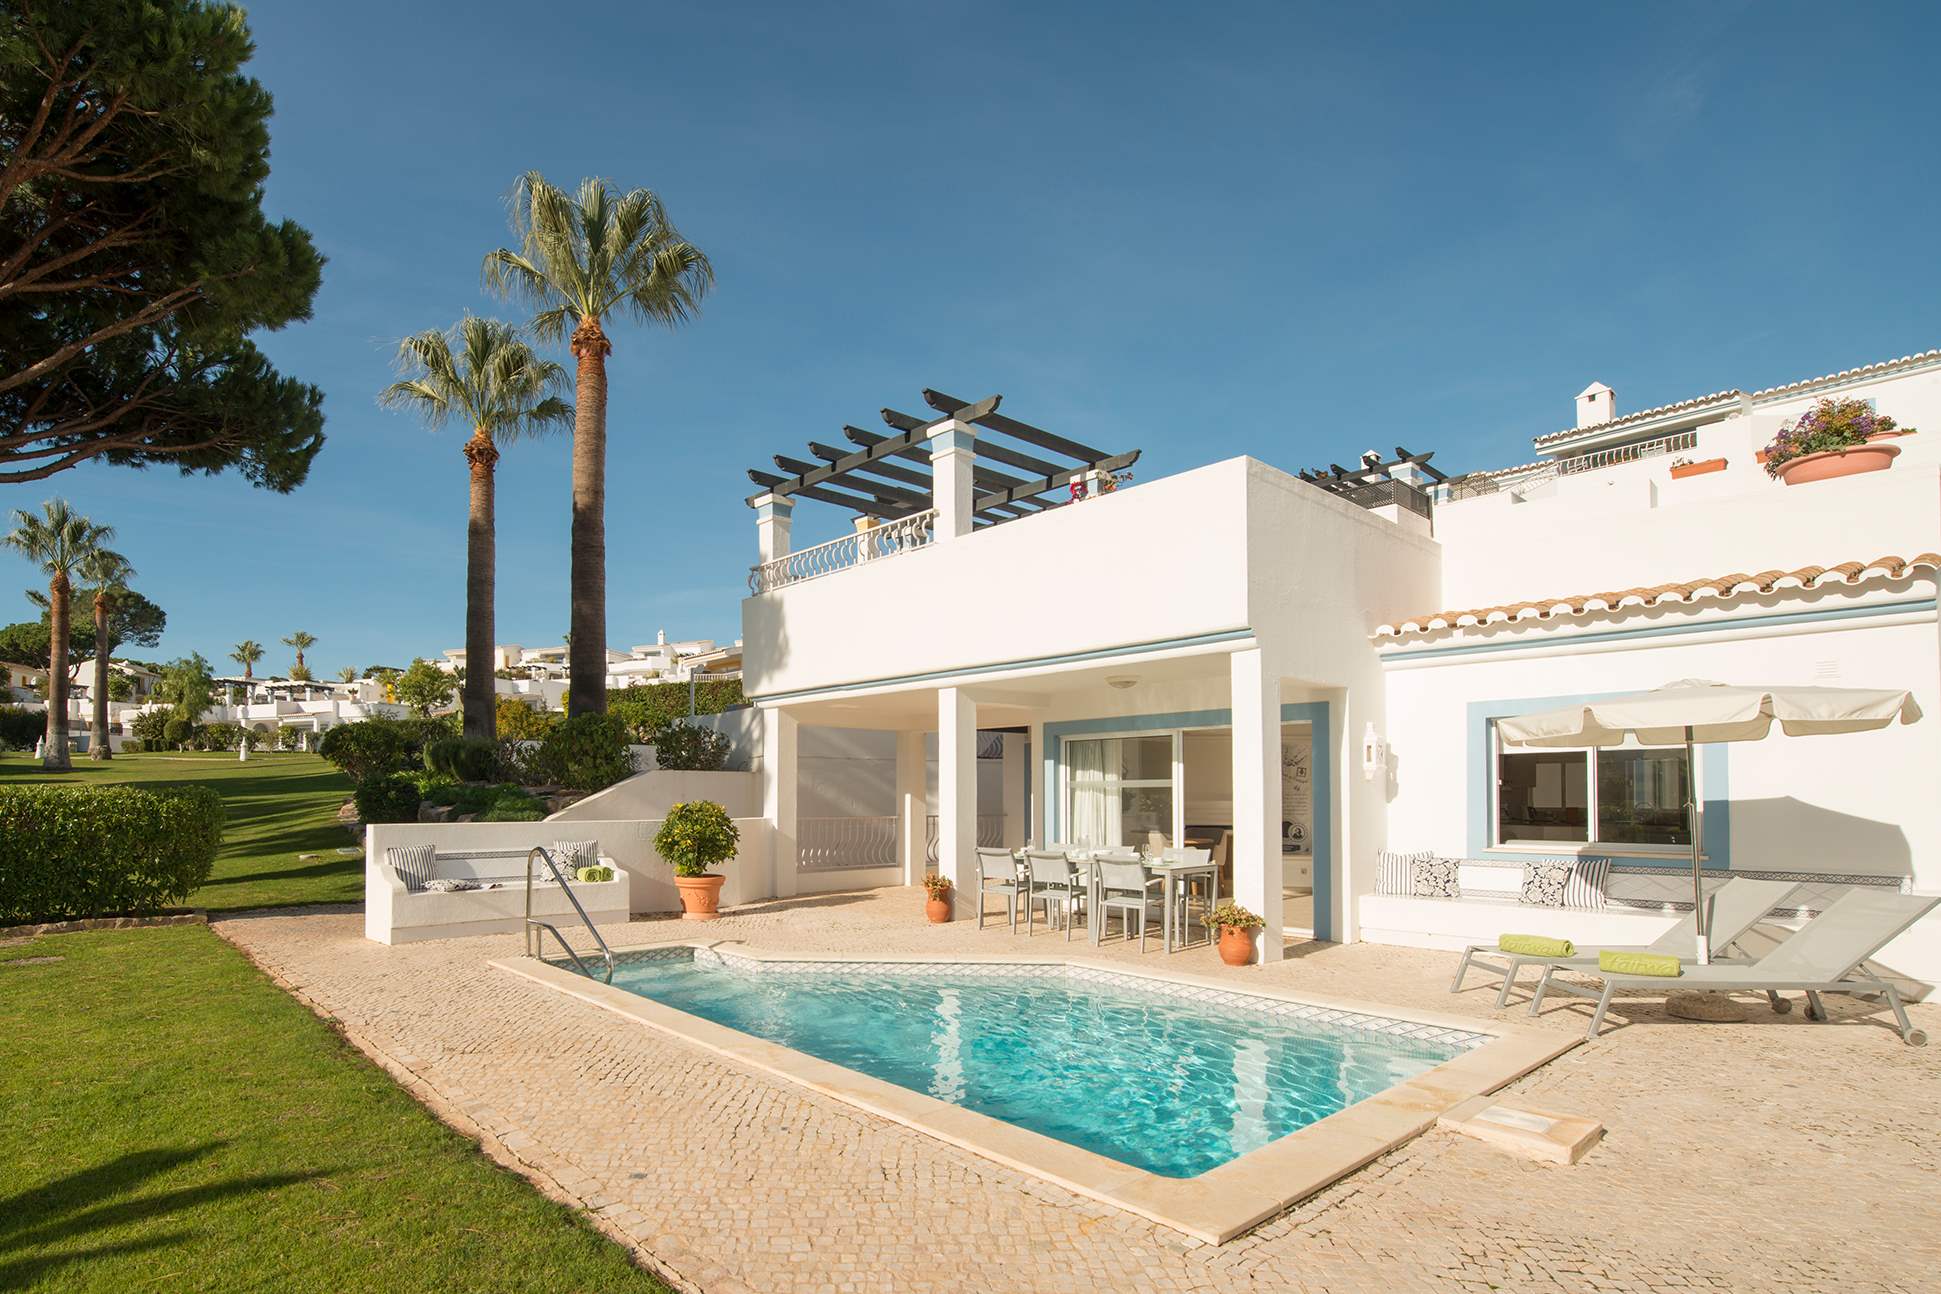 Four Seasons Fairways 3 Bed Hillside Apartment, Thursday Arrival, 3 bedroom villa in Four Seasons Fairways, Algarve